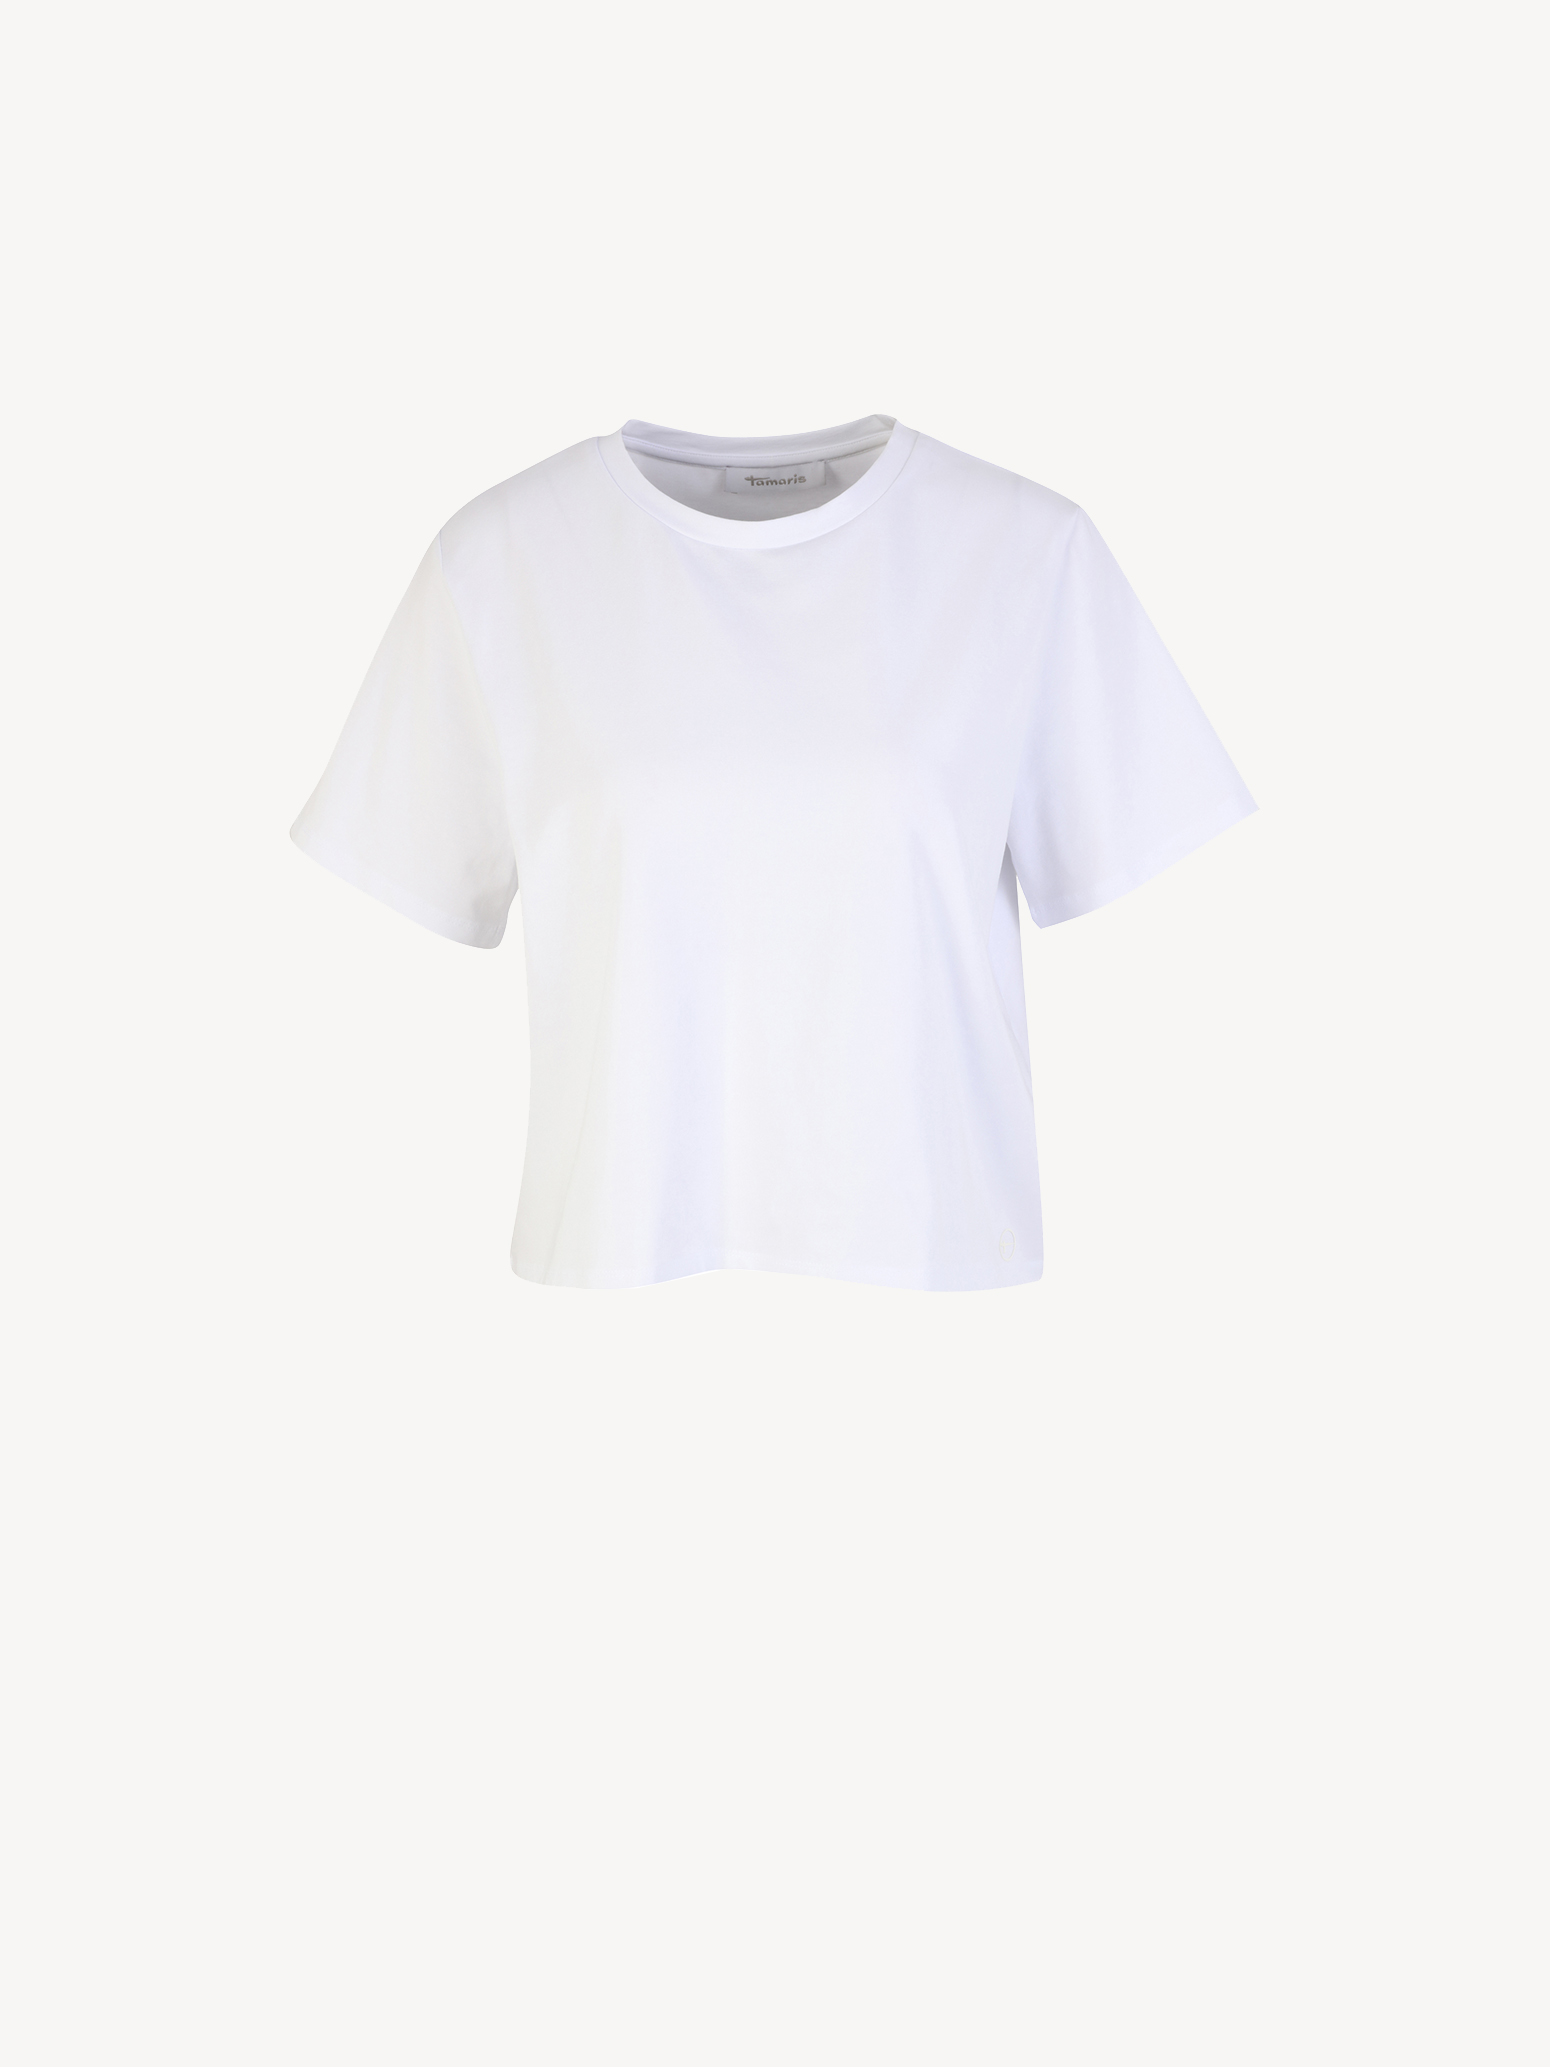 Oversized T-Shirt - weiß, Bright White, hi-res